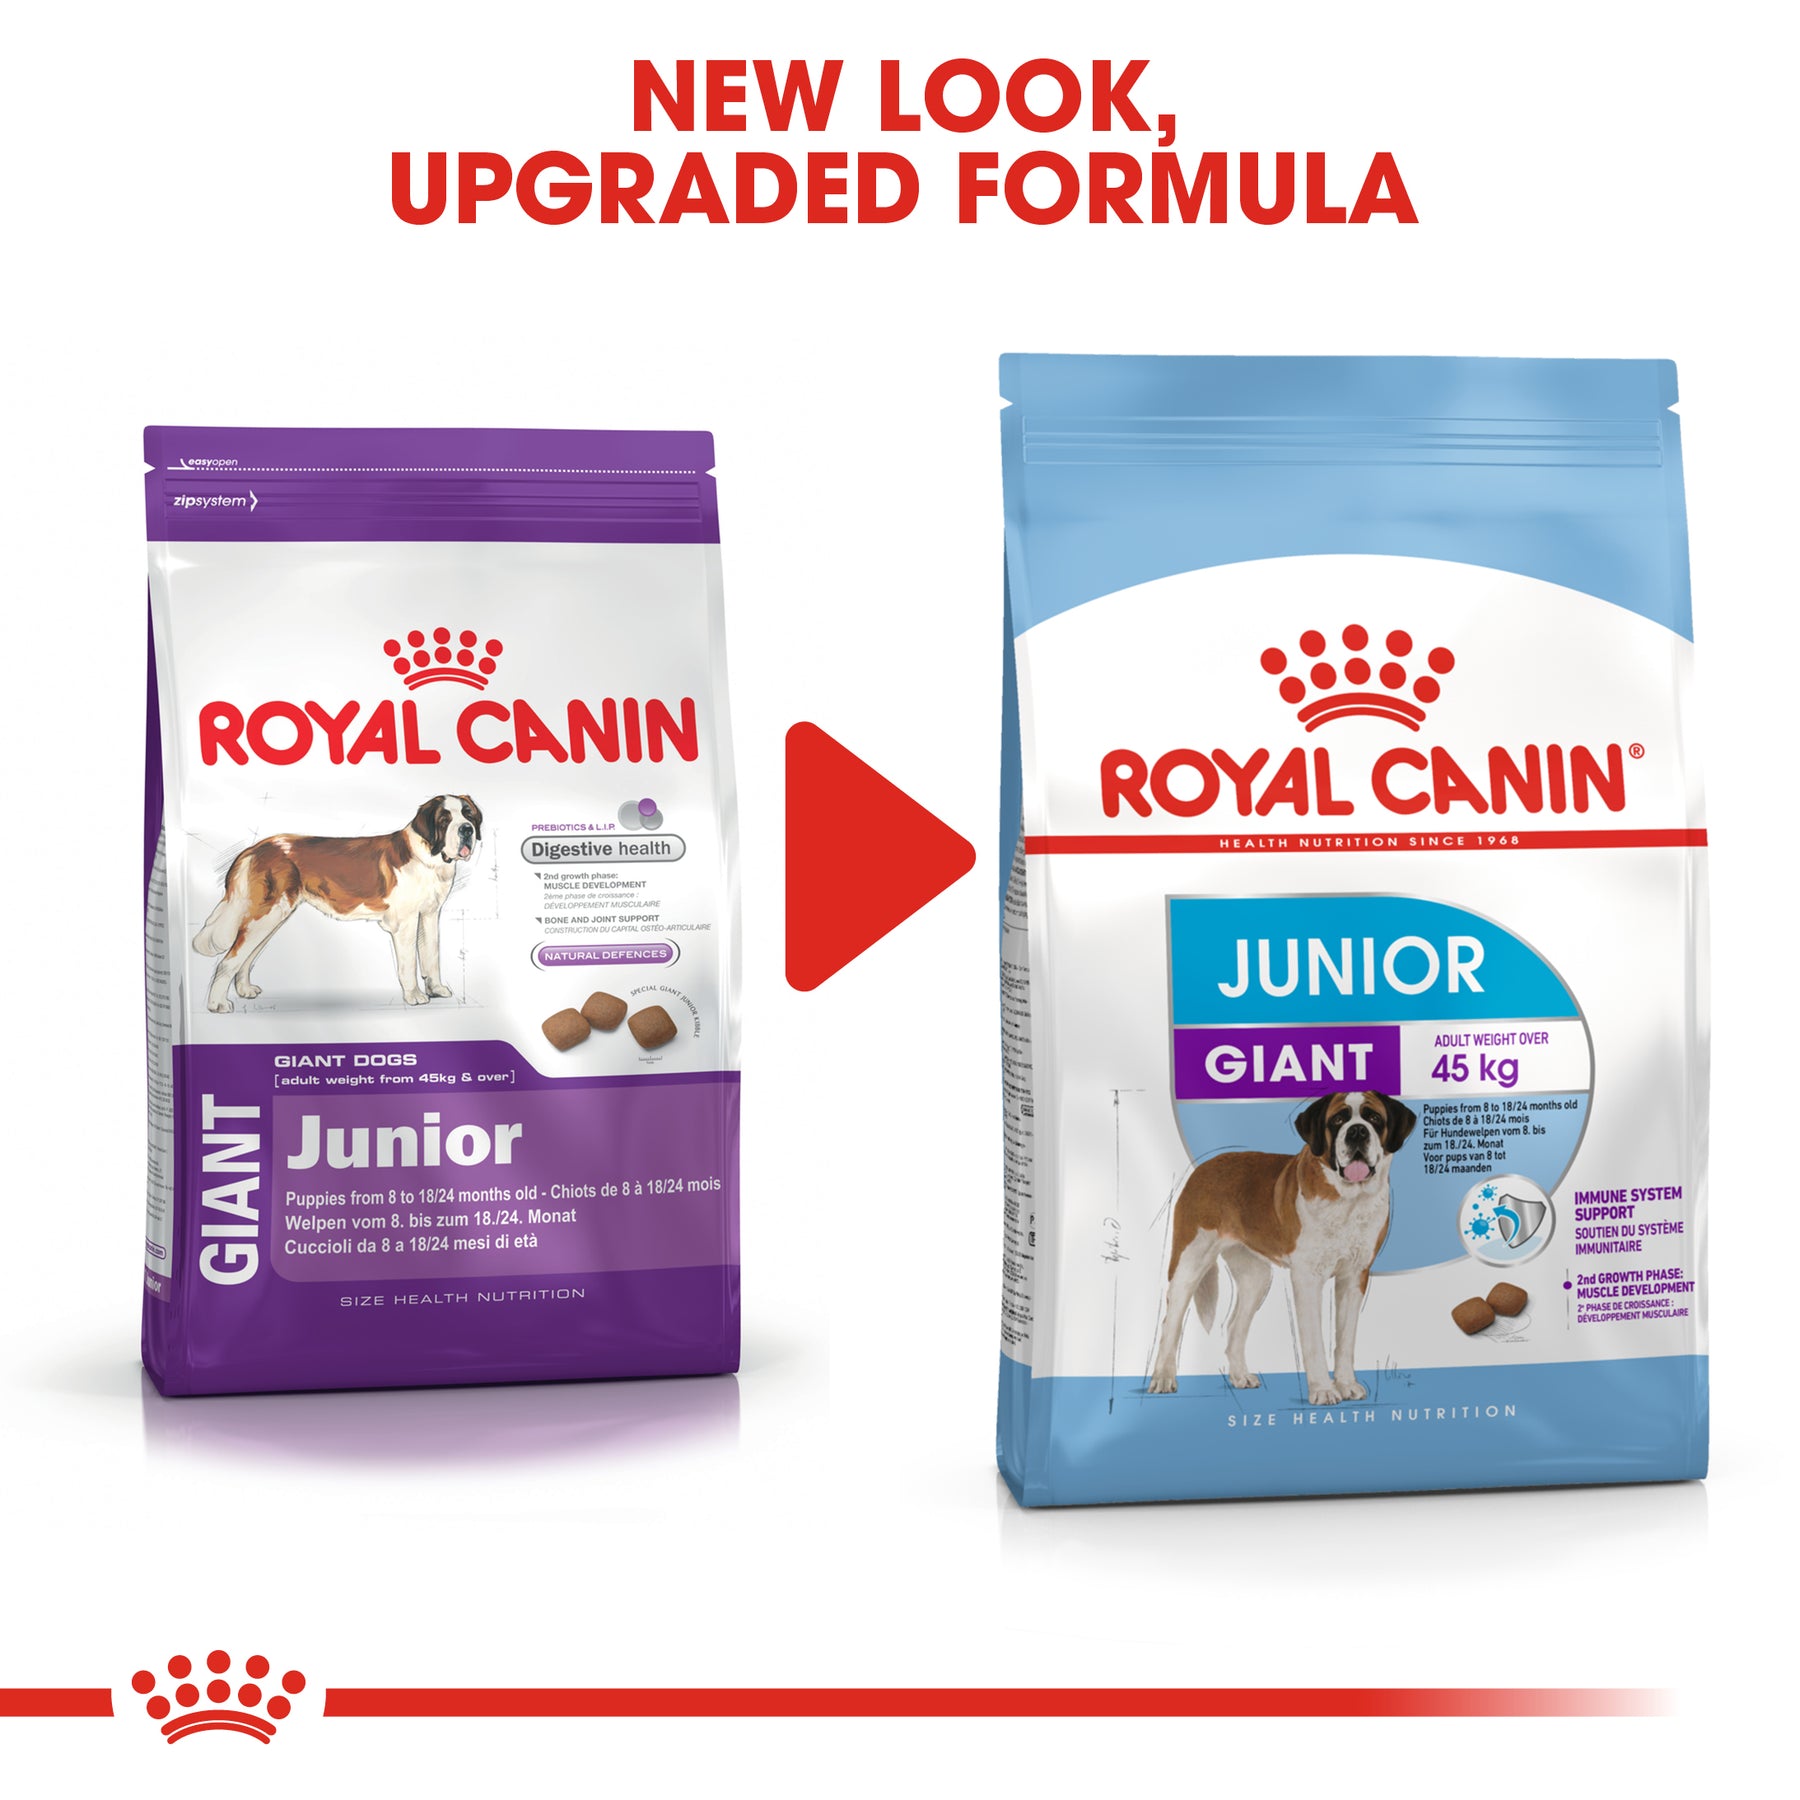 ROYAL CANIN®- Junior Giant Dog Dry Food